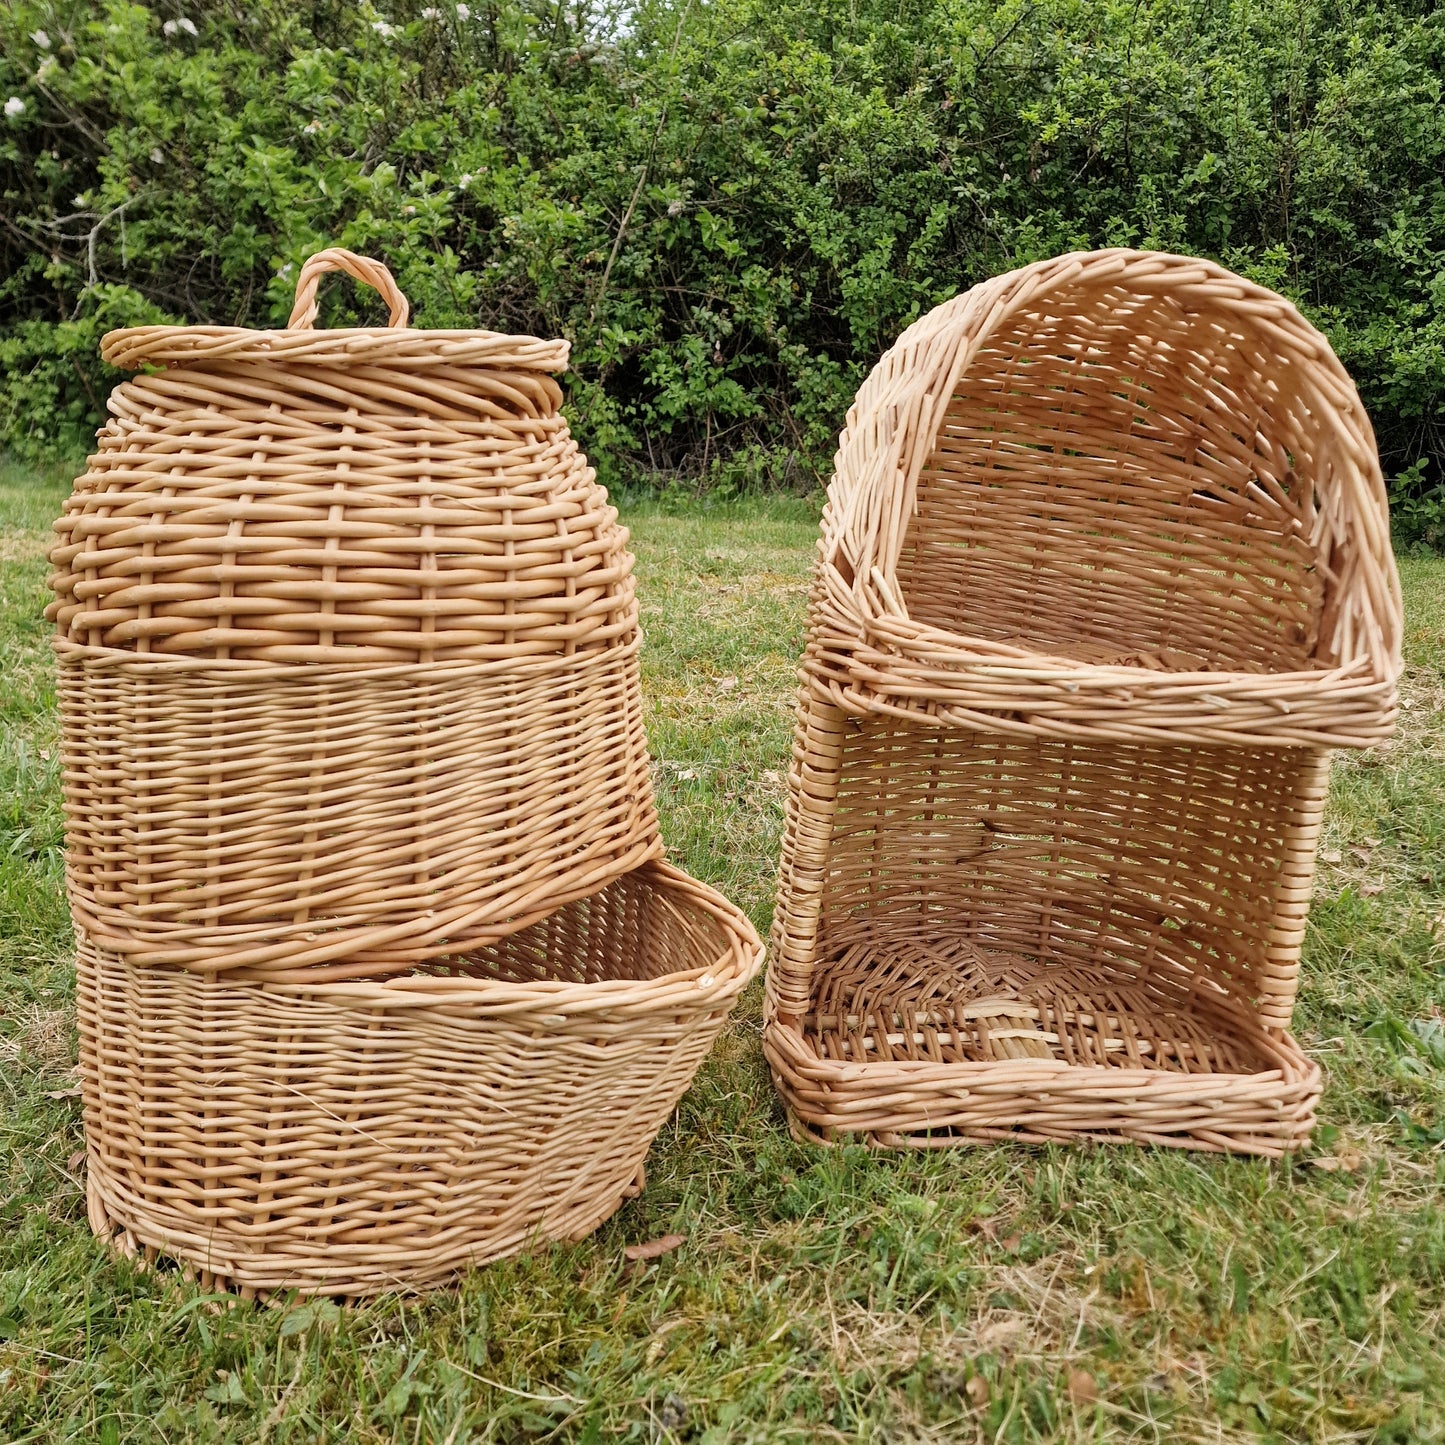 Willow Potato Hopper And Vegetable Storage Basket Set